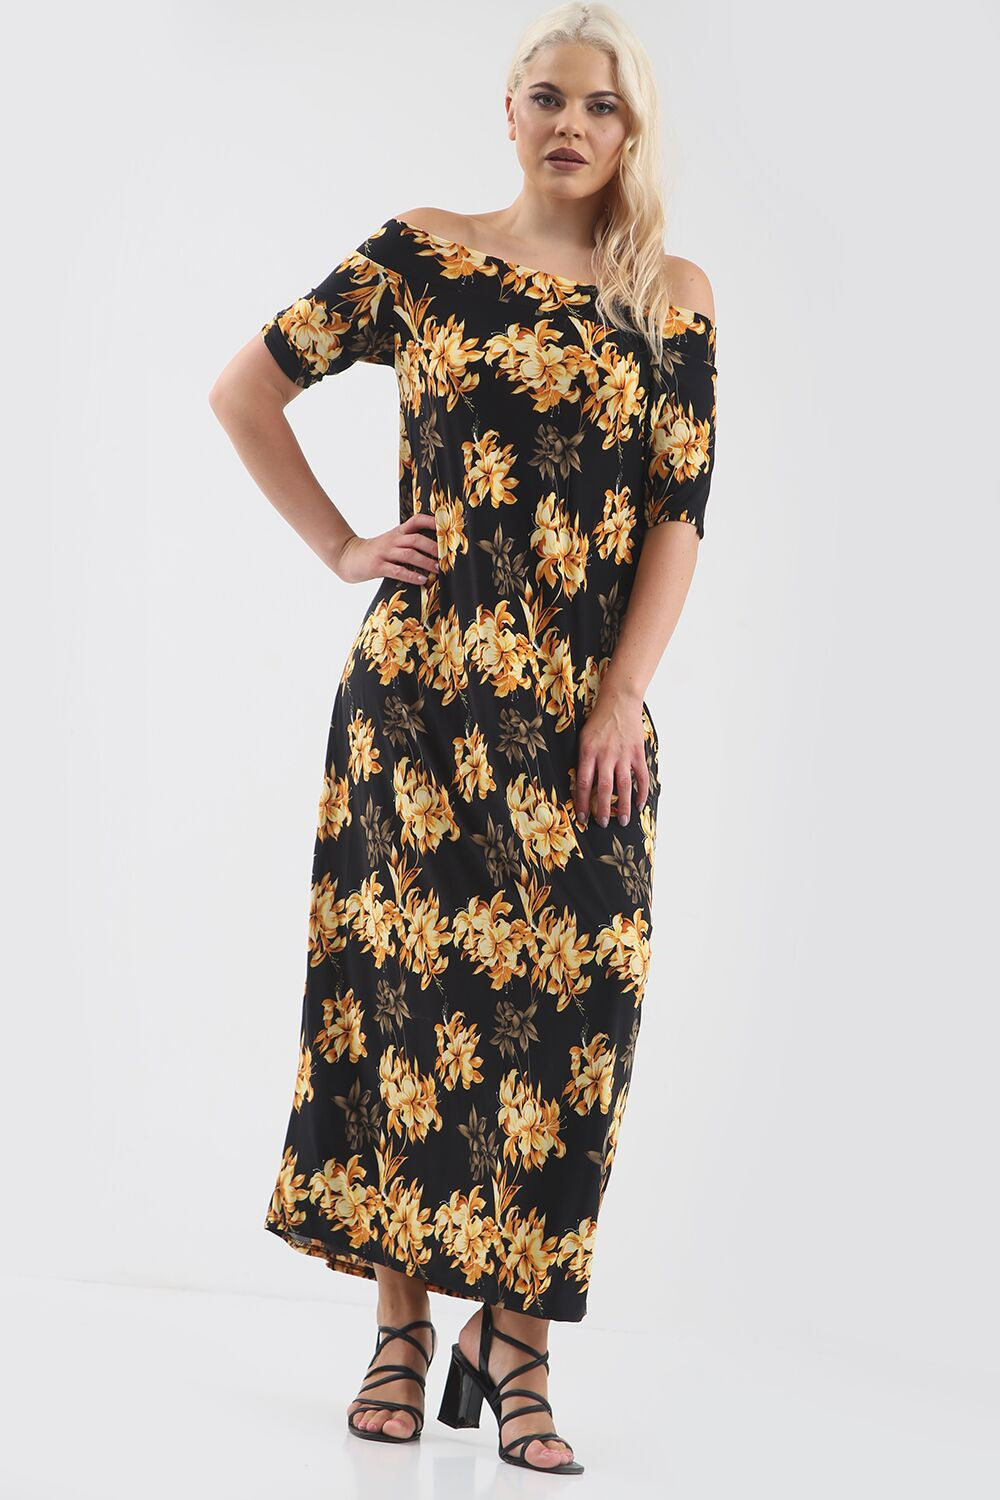 Black Off Shoulder Gold Floral Print Maxi Dress - bejealous-com